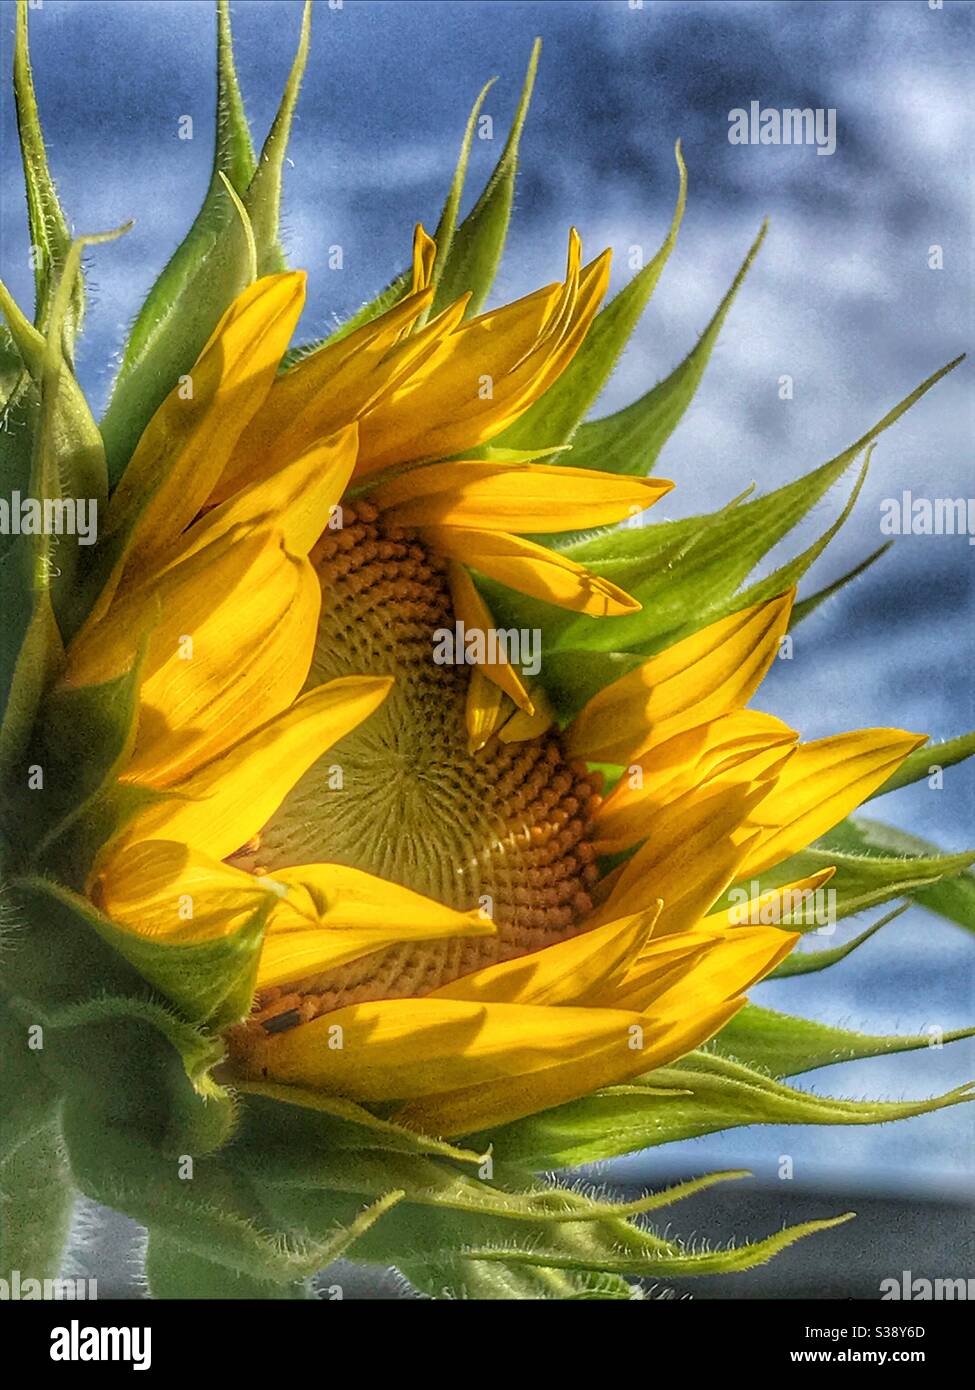 Sunflower opening in warm sunlight Stock Photo